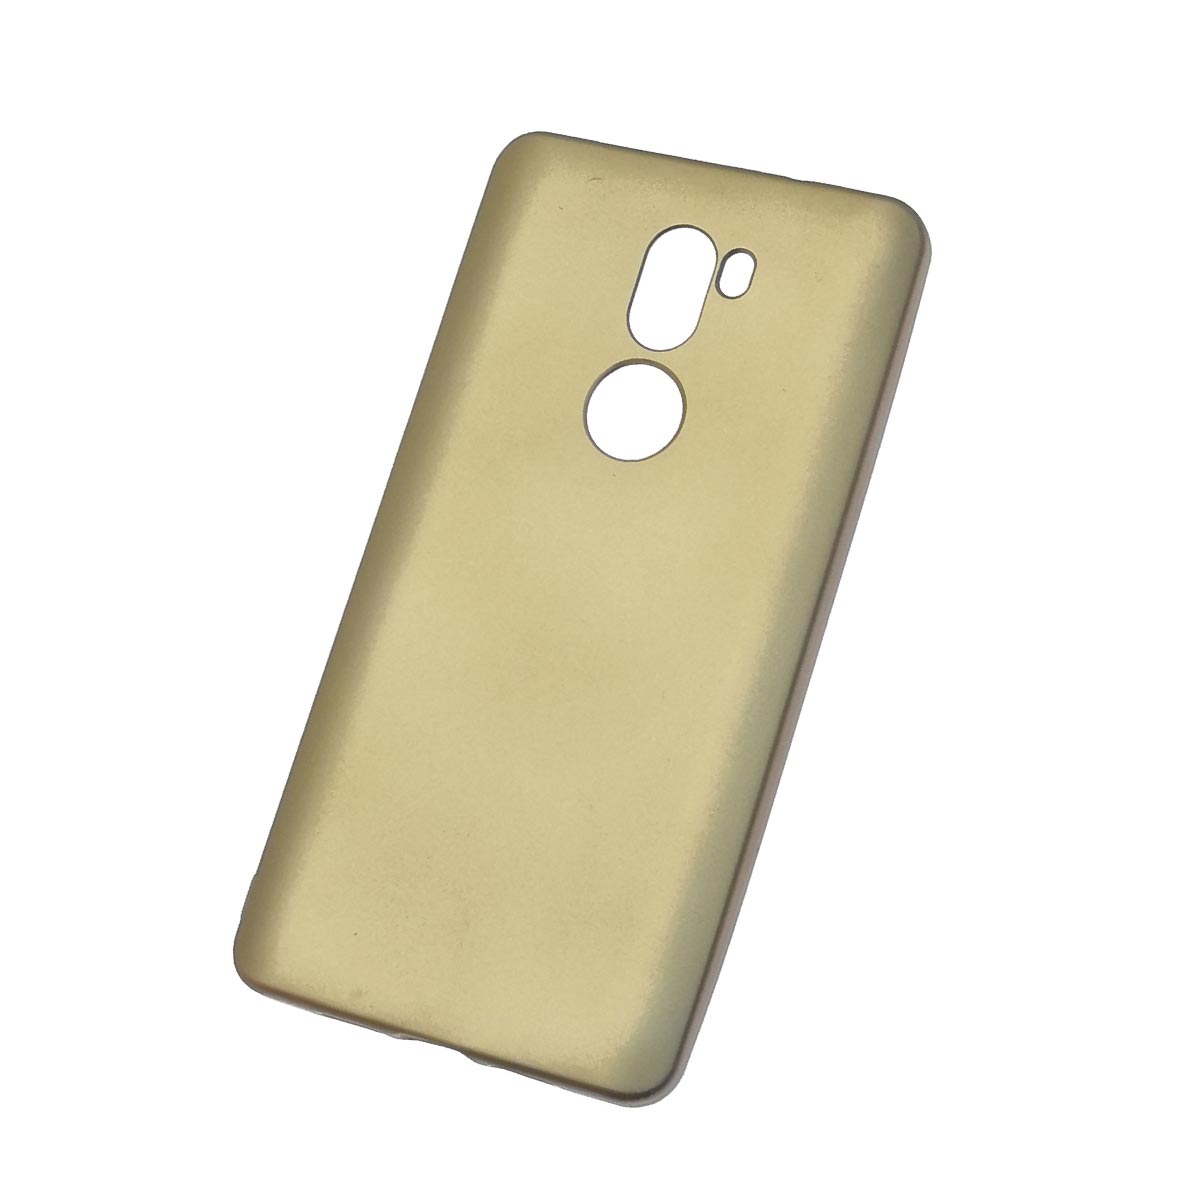 Чехол накладка J-Case THIN для XIAOMI Mi5S Plus, силикон, цвет золотистый.